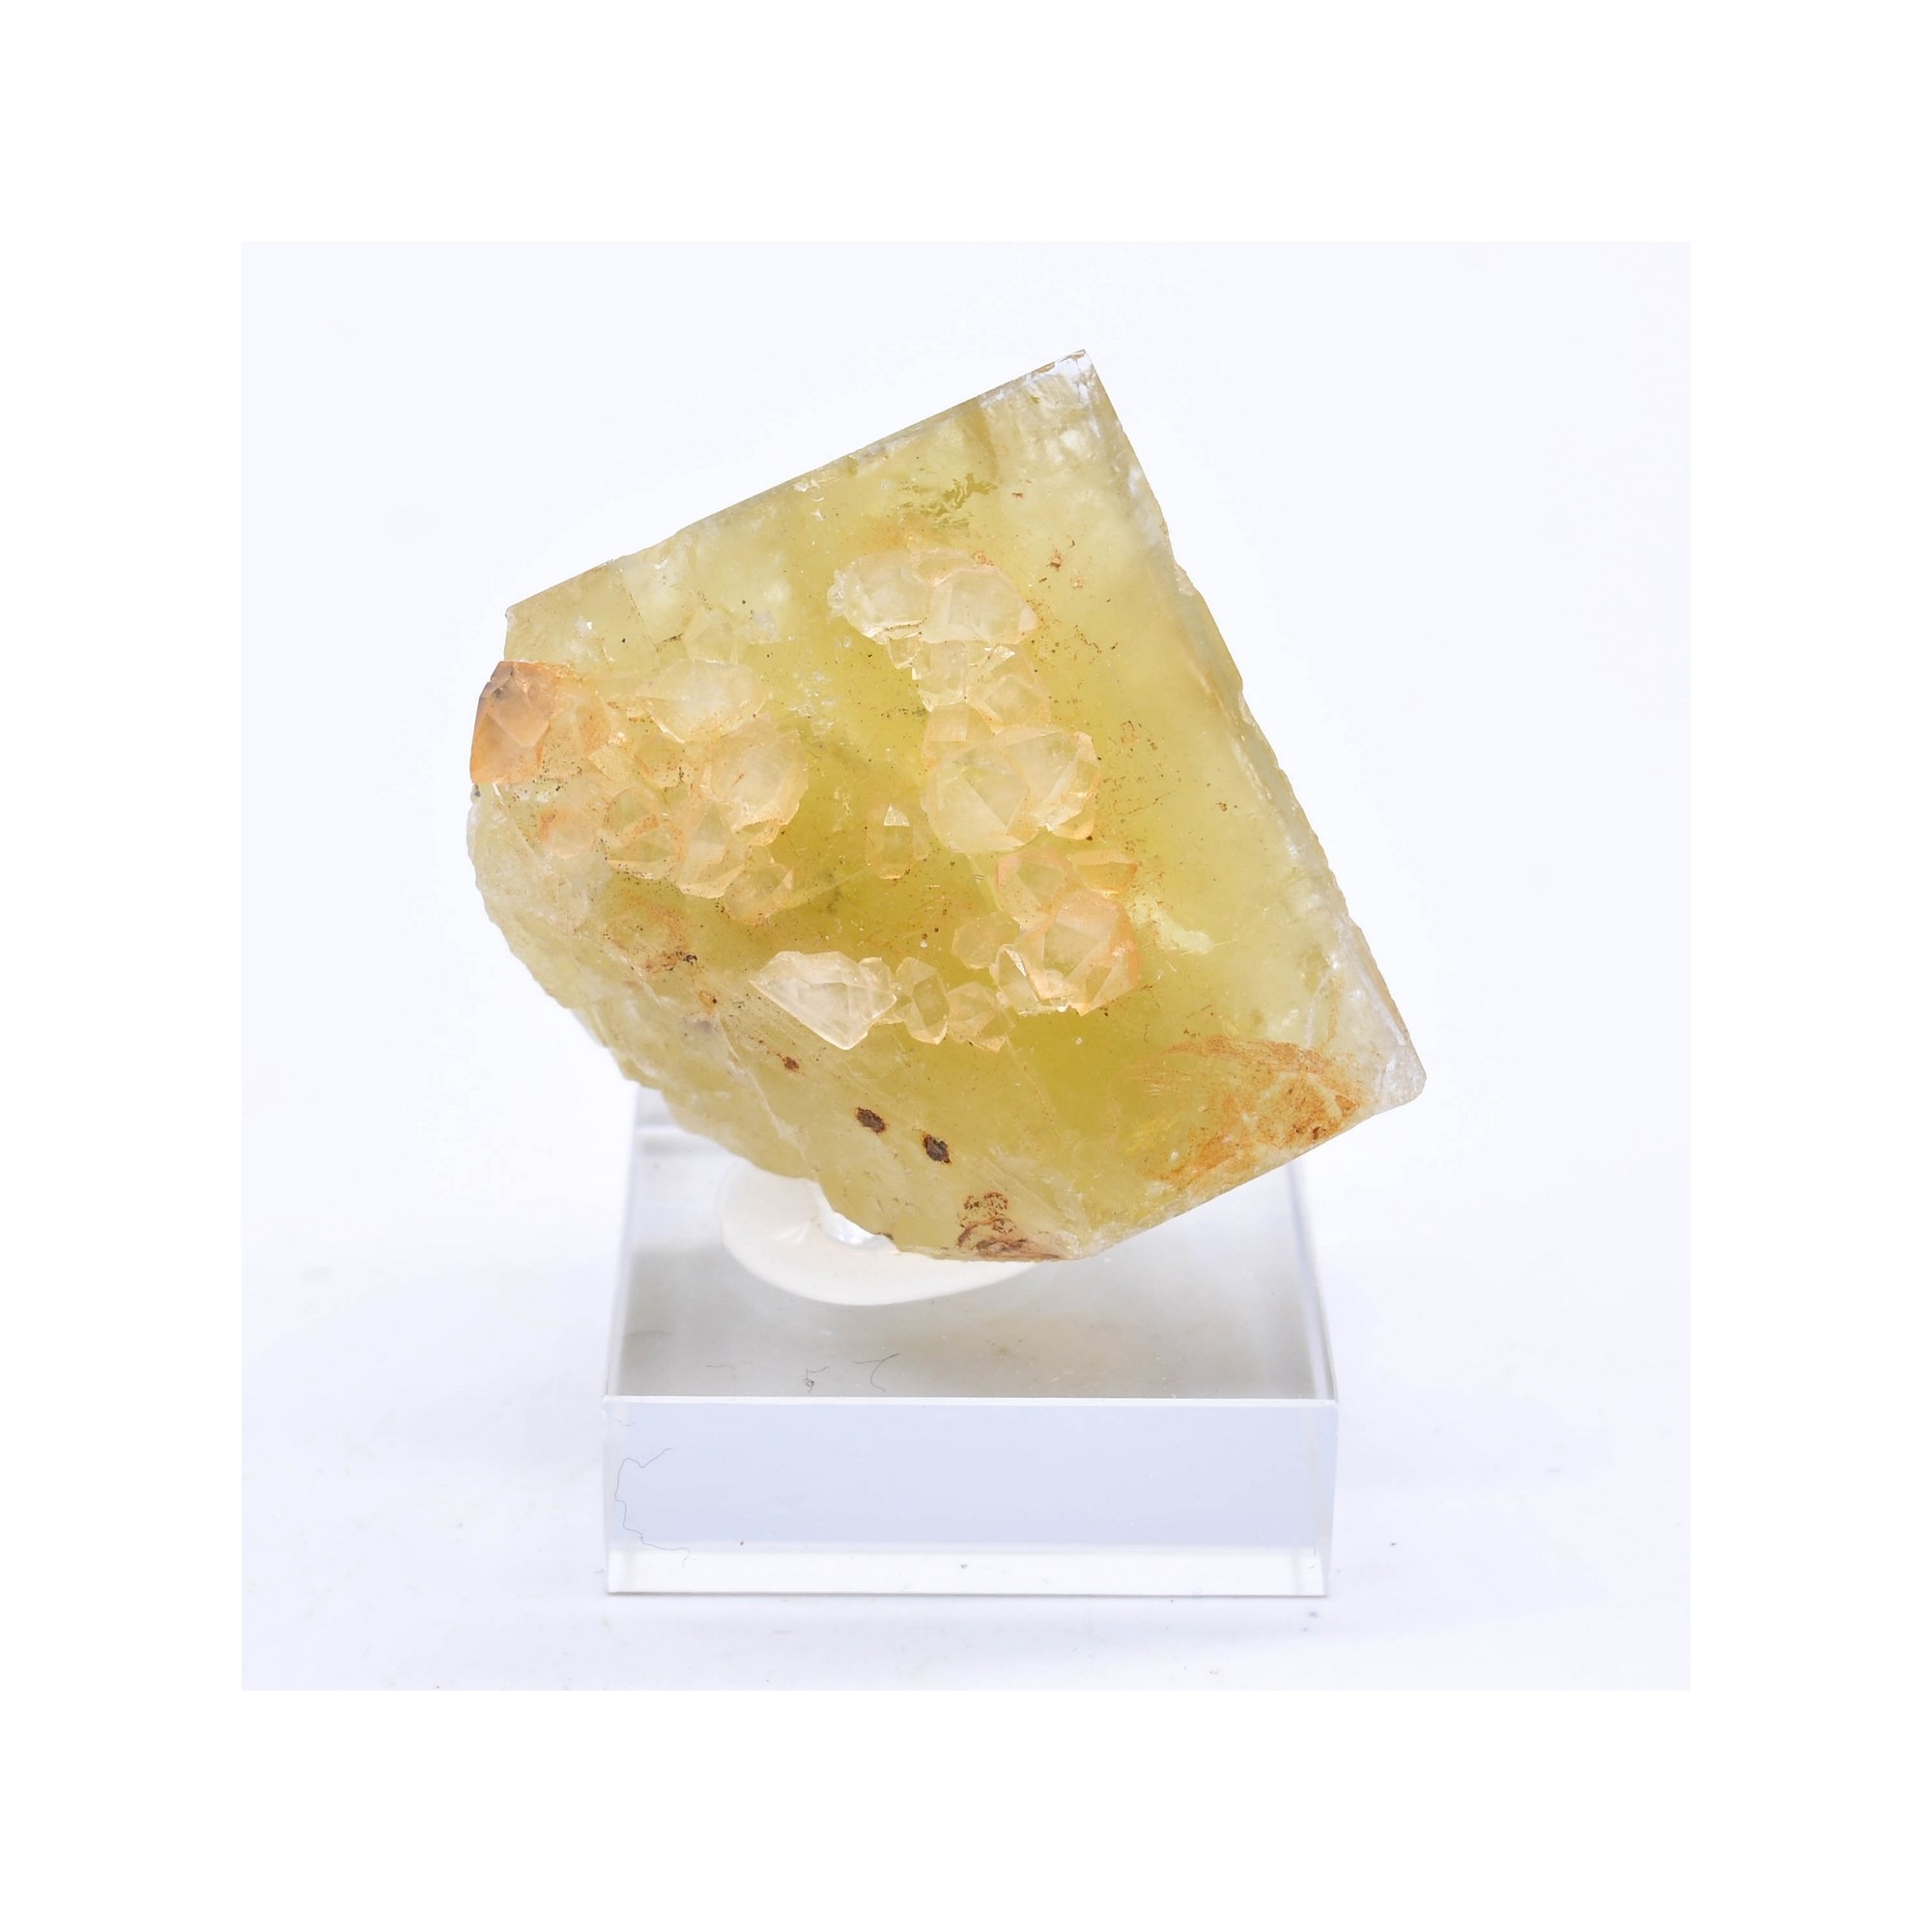 Fluorite and quartz - Peyrebrune, Tarn, France